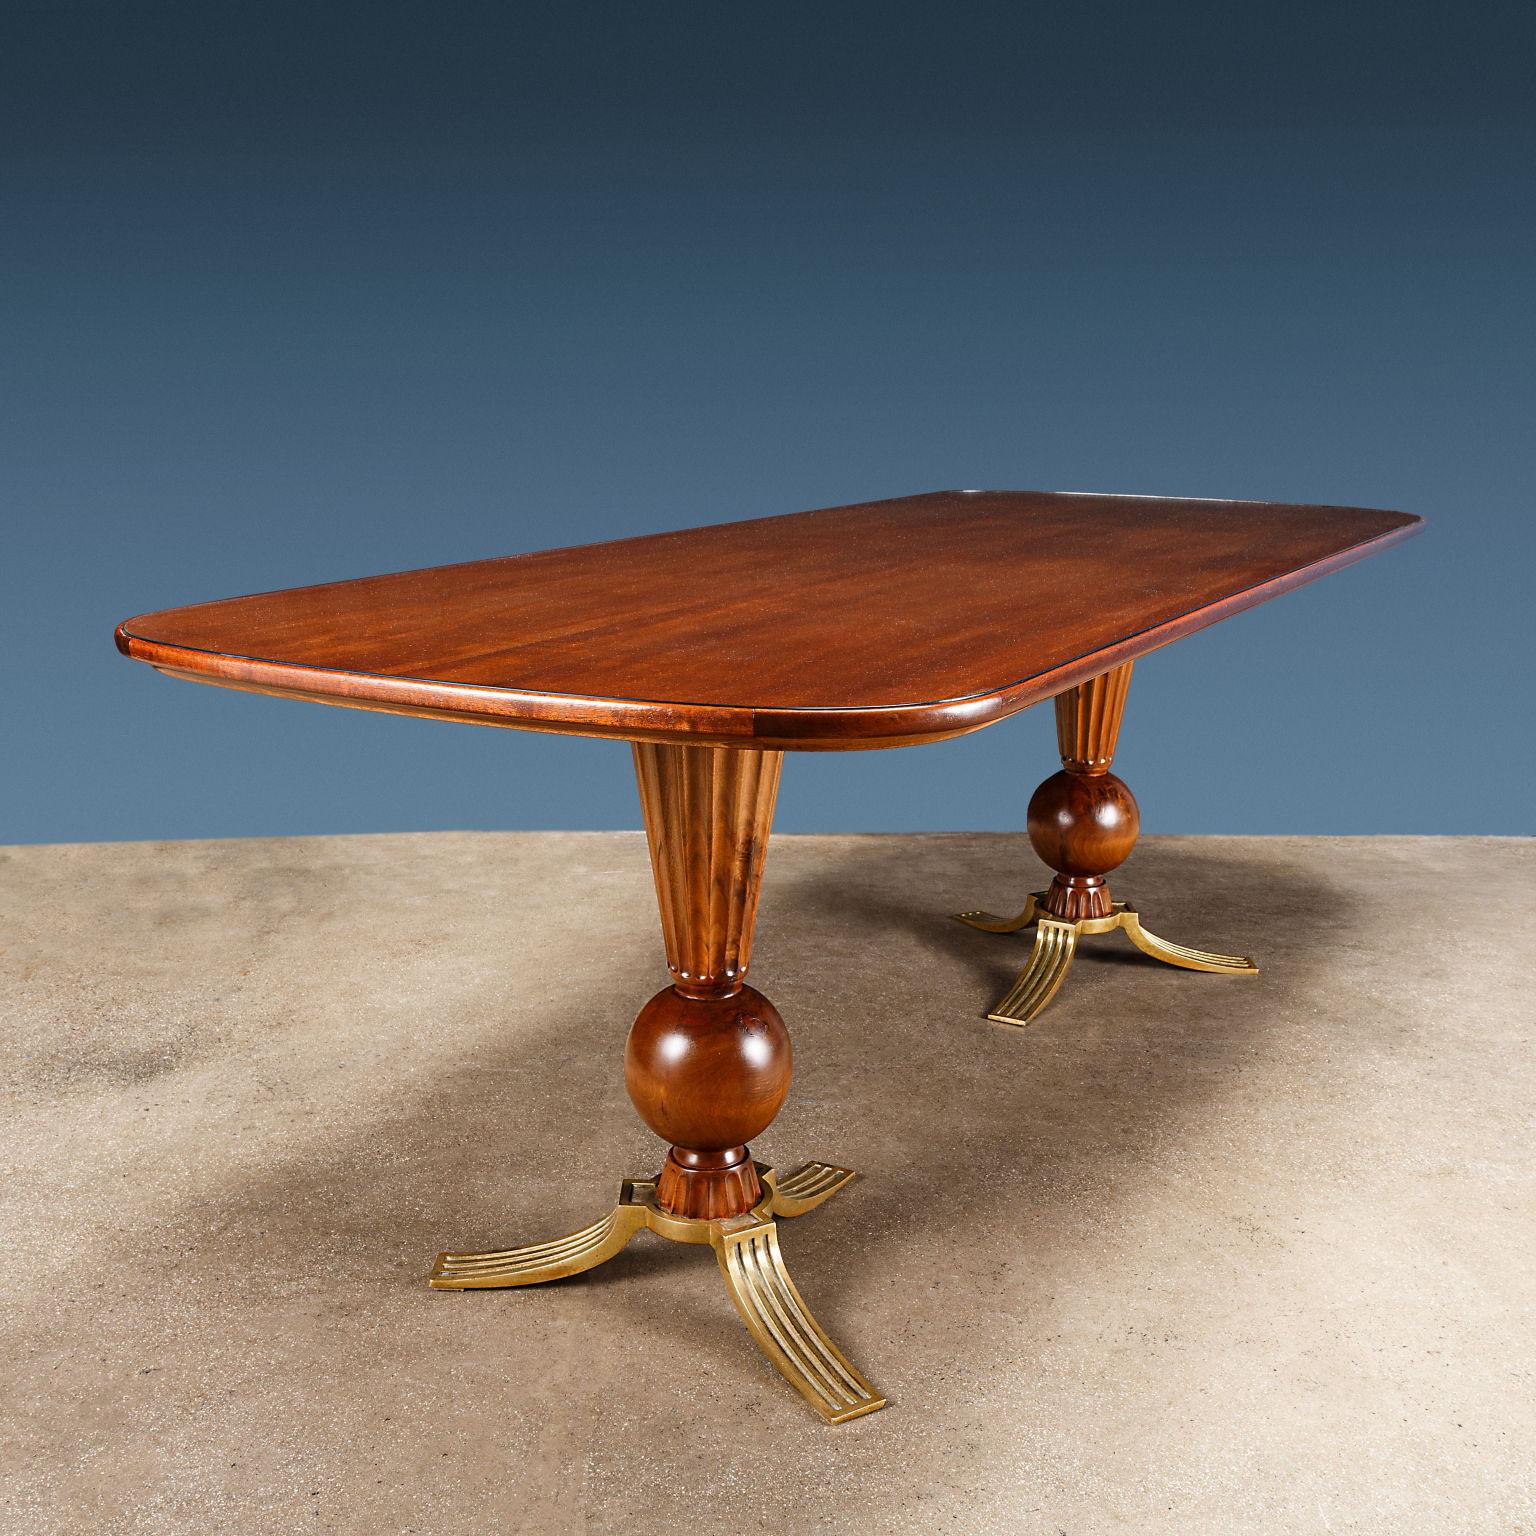 Elegant table in walnut wood, with glass top and brass legs, designed by Osvaldo Borsani for Arredamenti Borsani Varedo.